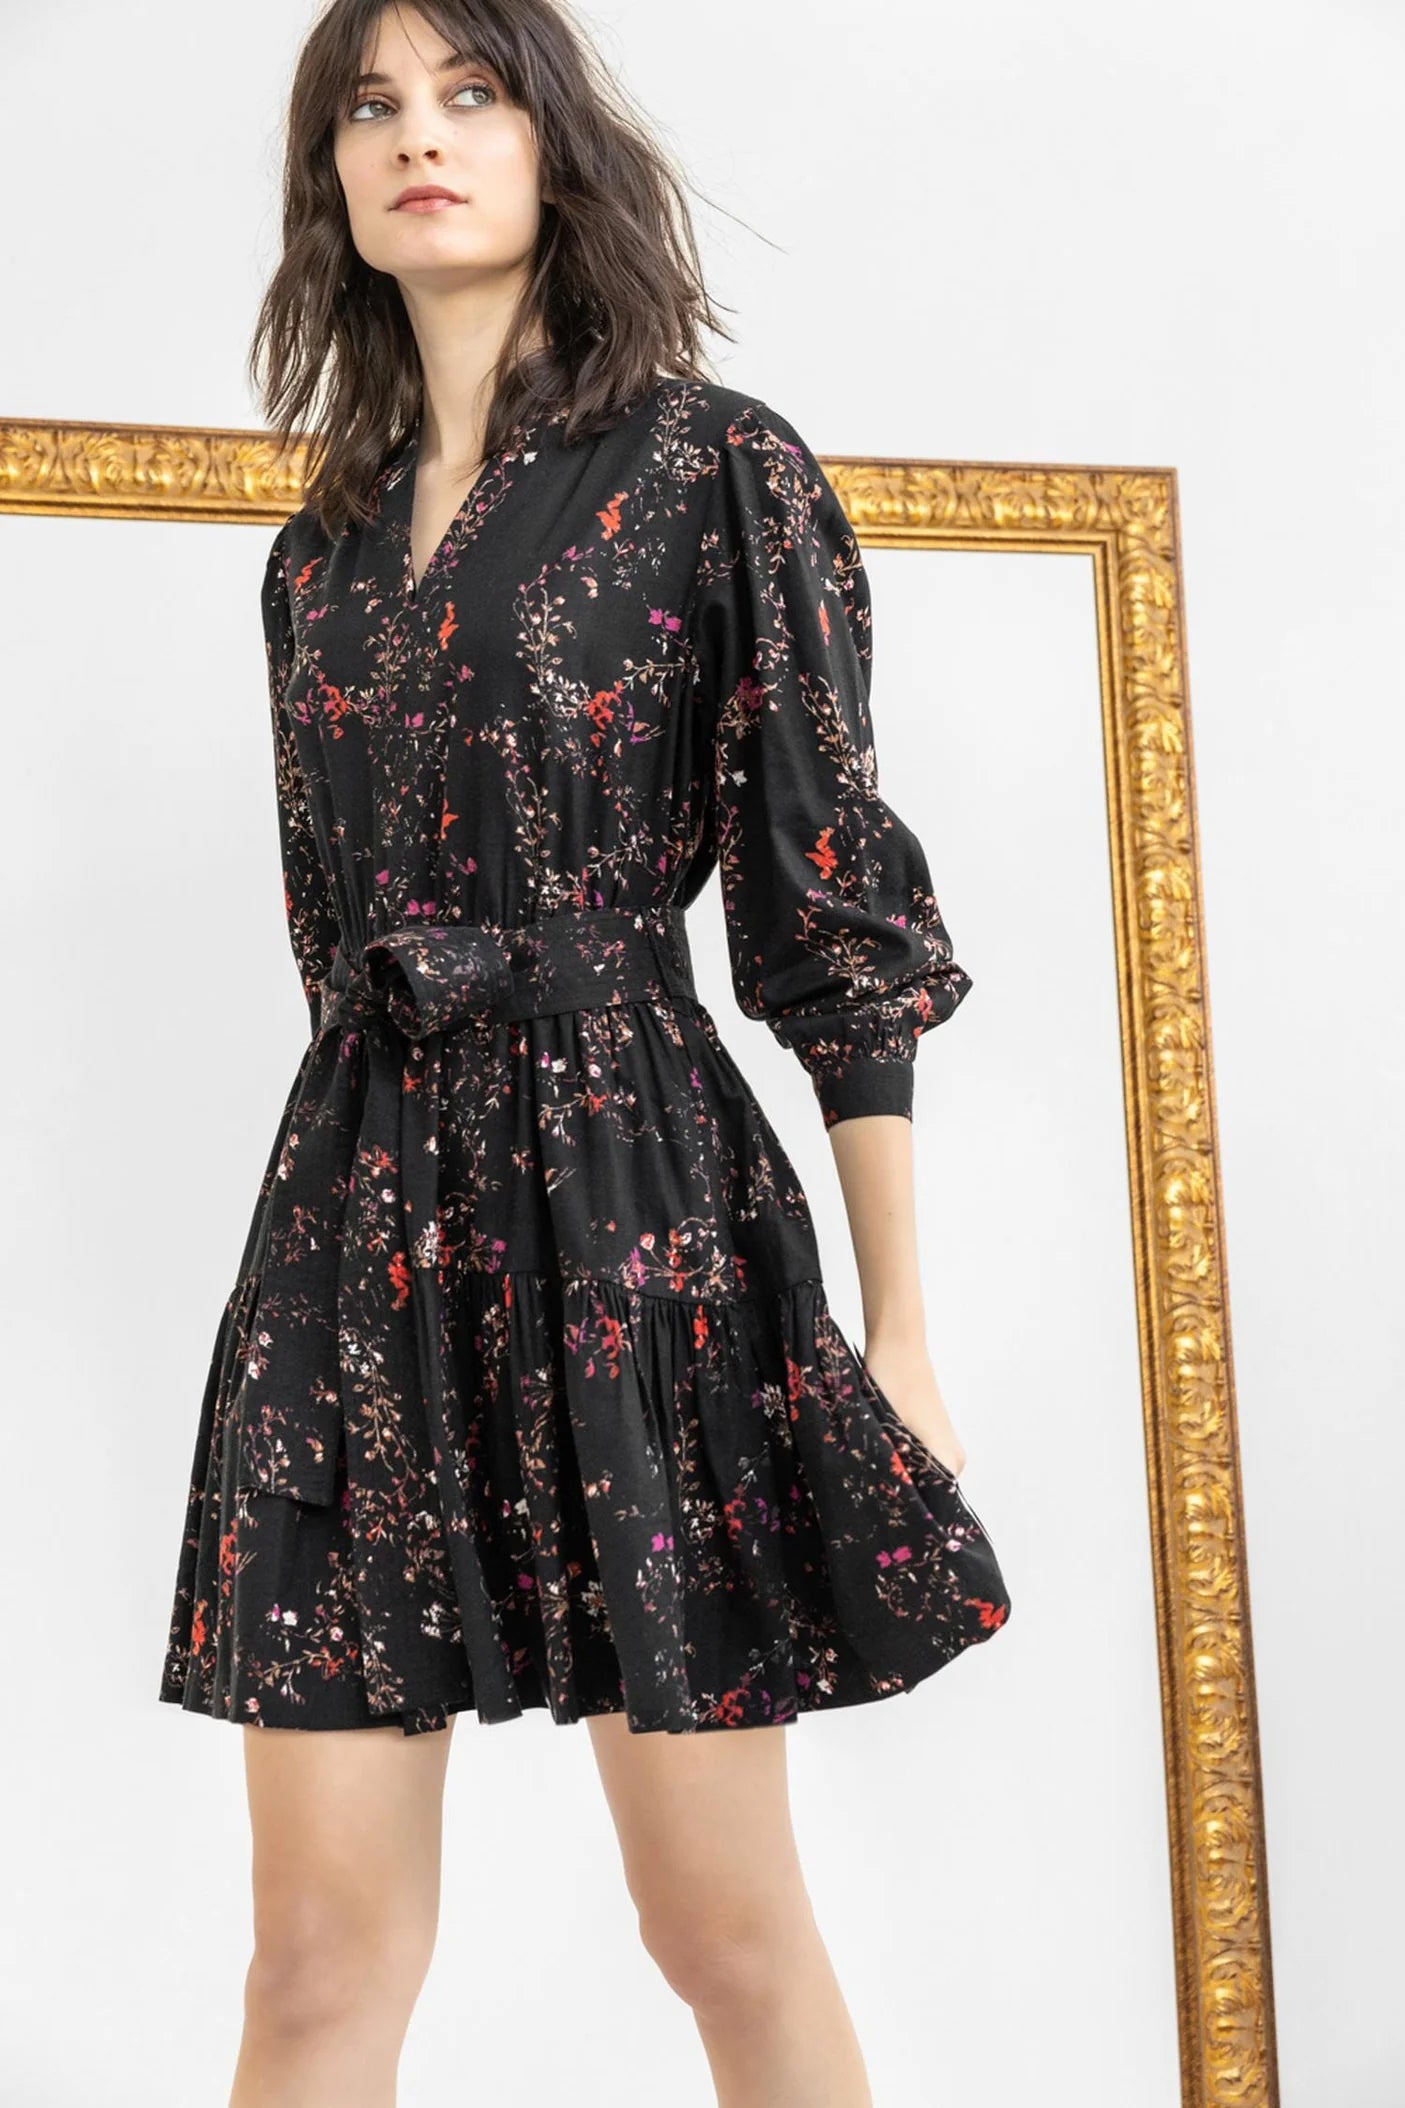 Long sleeve split neck peplum dress (PA2383) - black floral